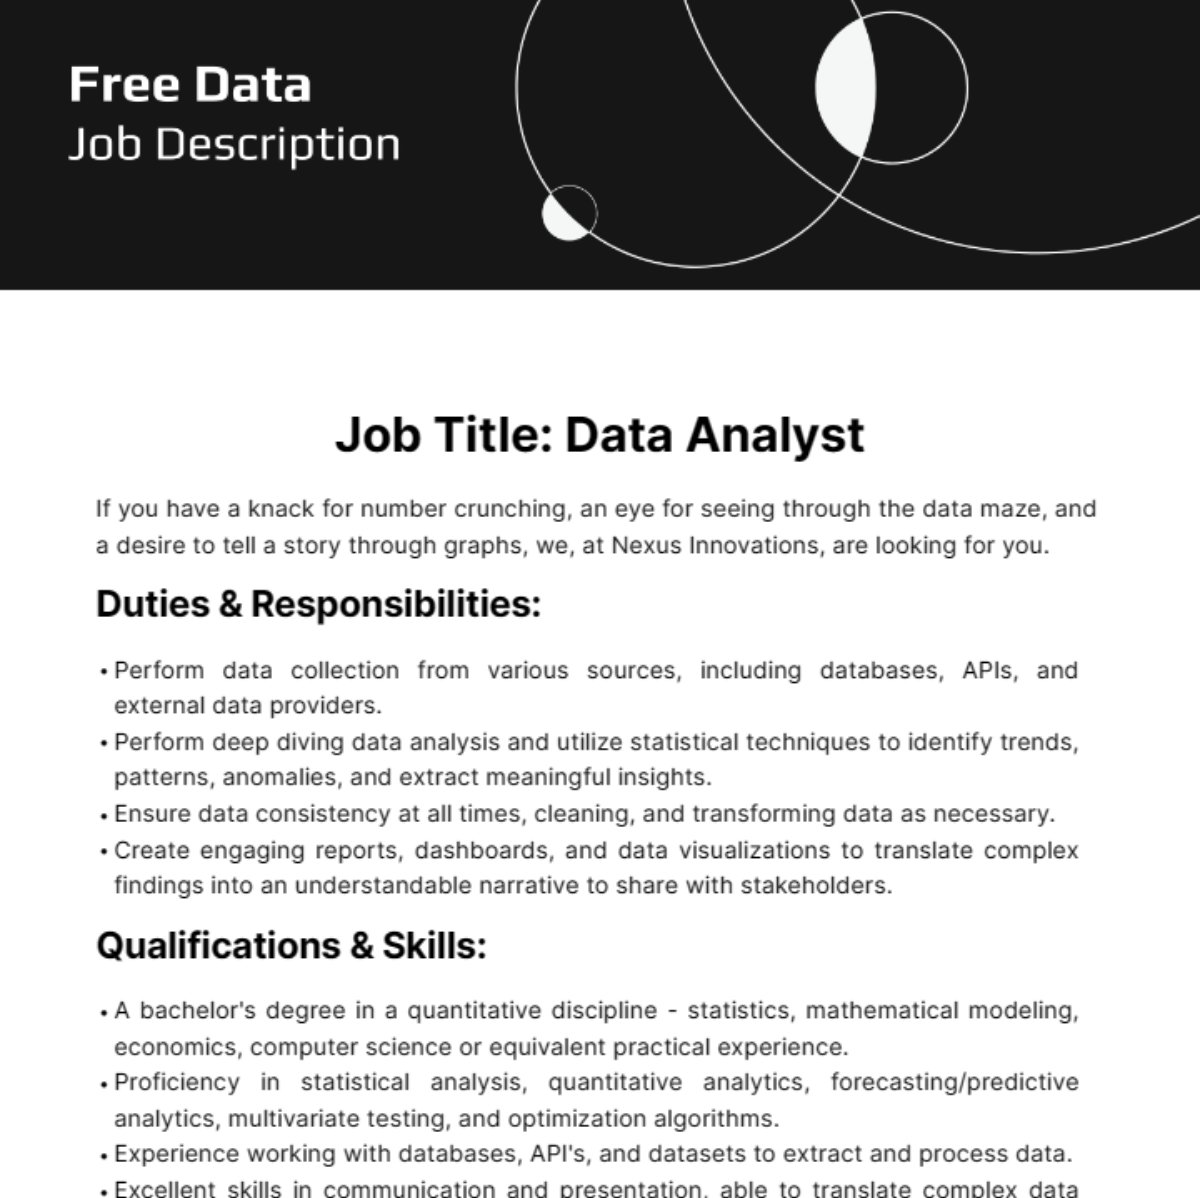 Free Data Job Description Template